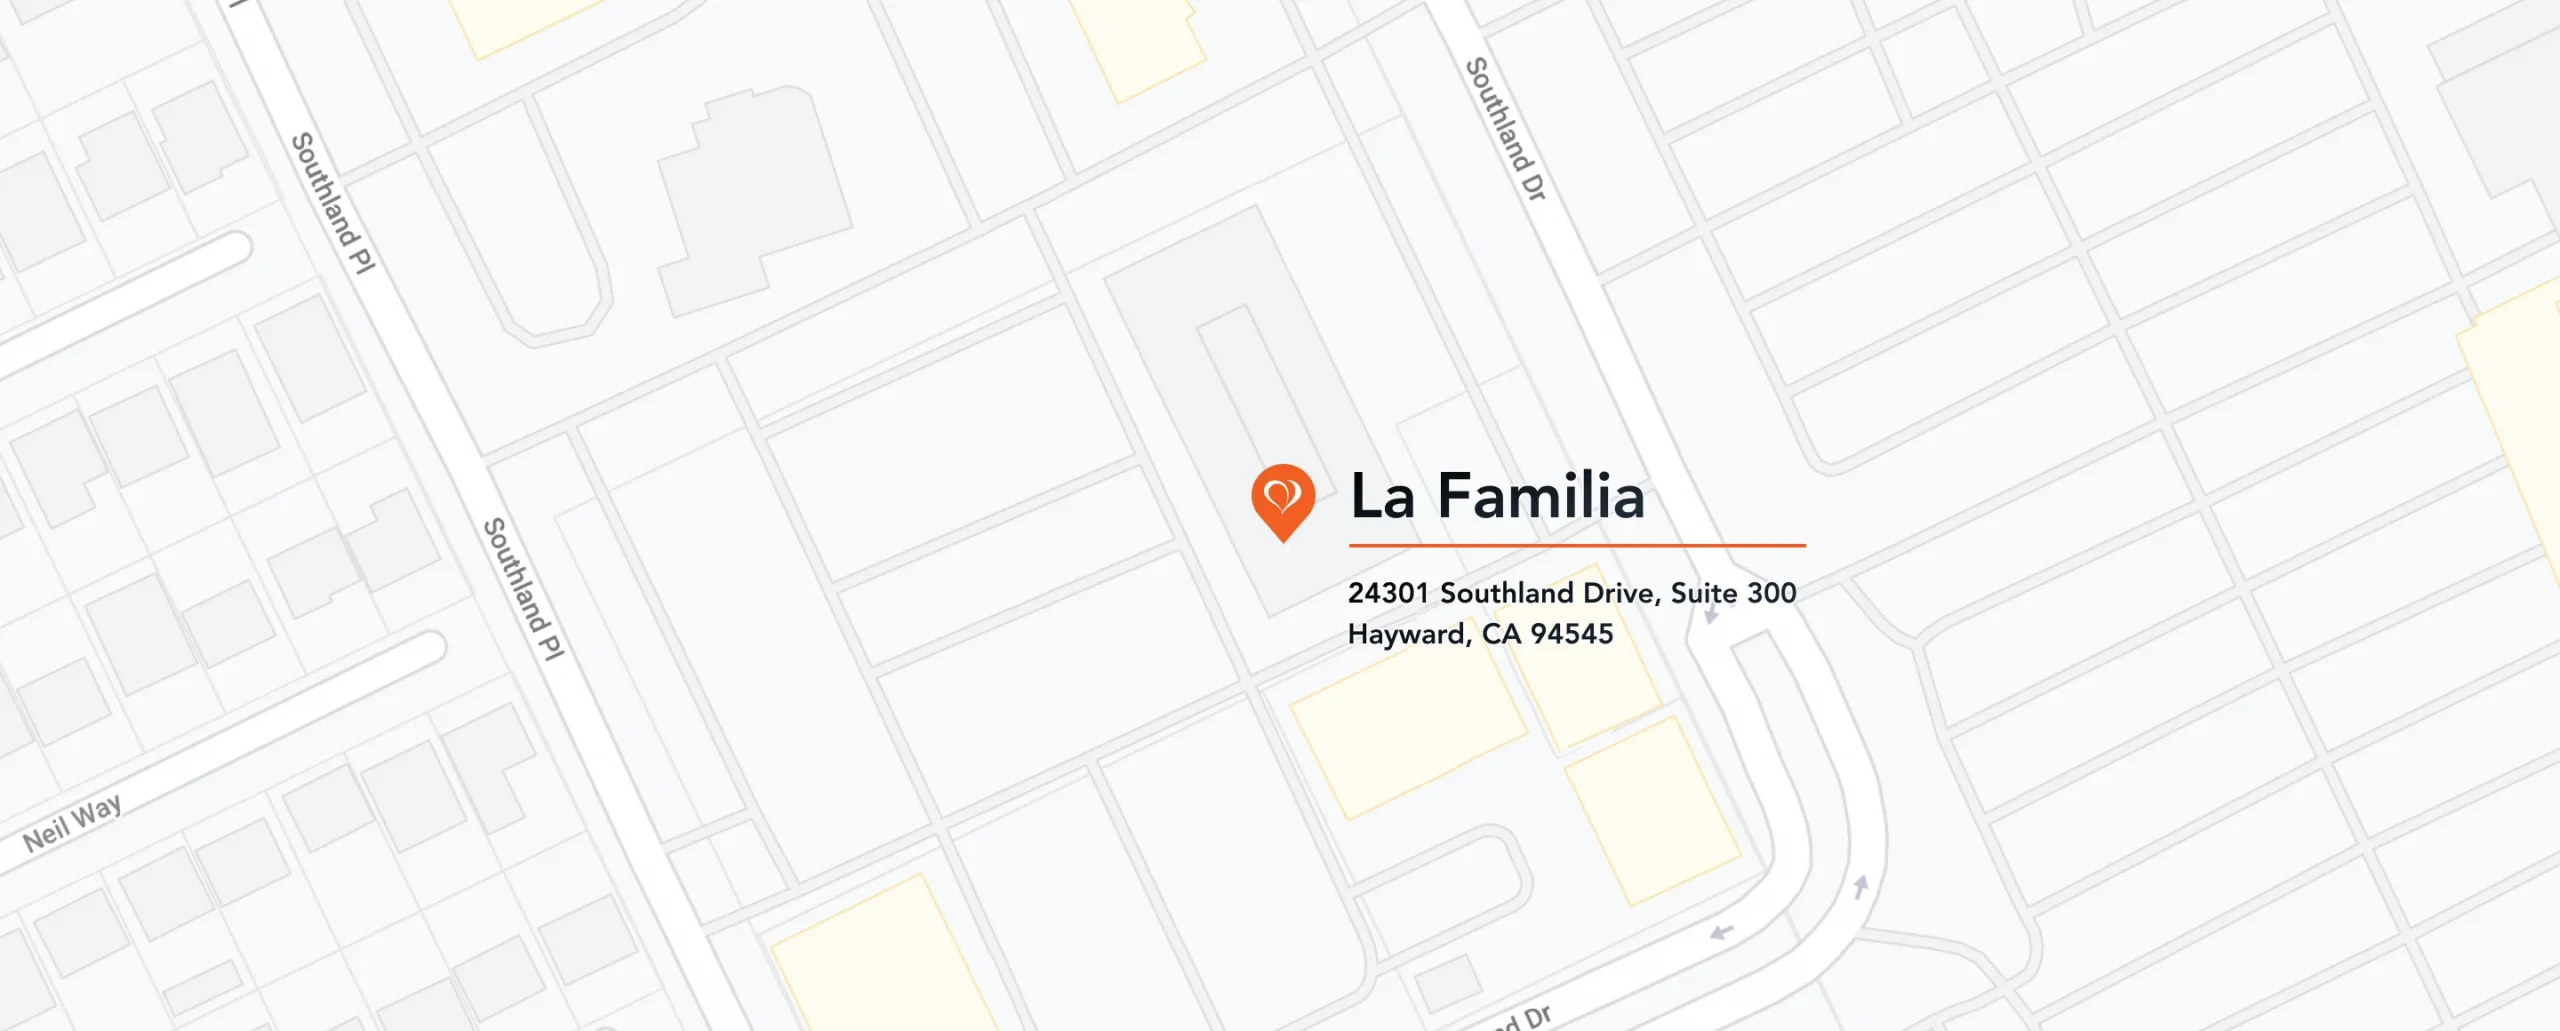 La Familia contact map